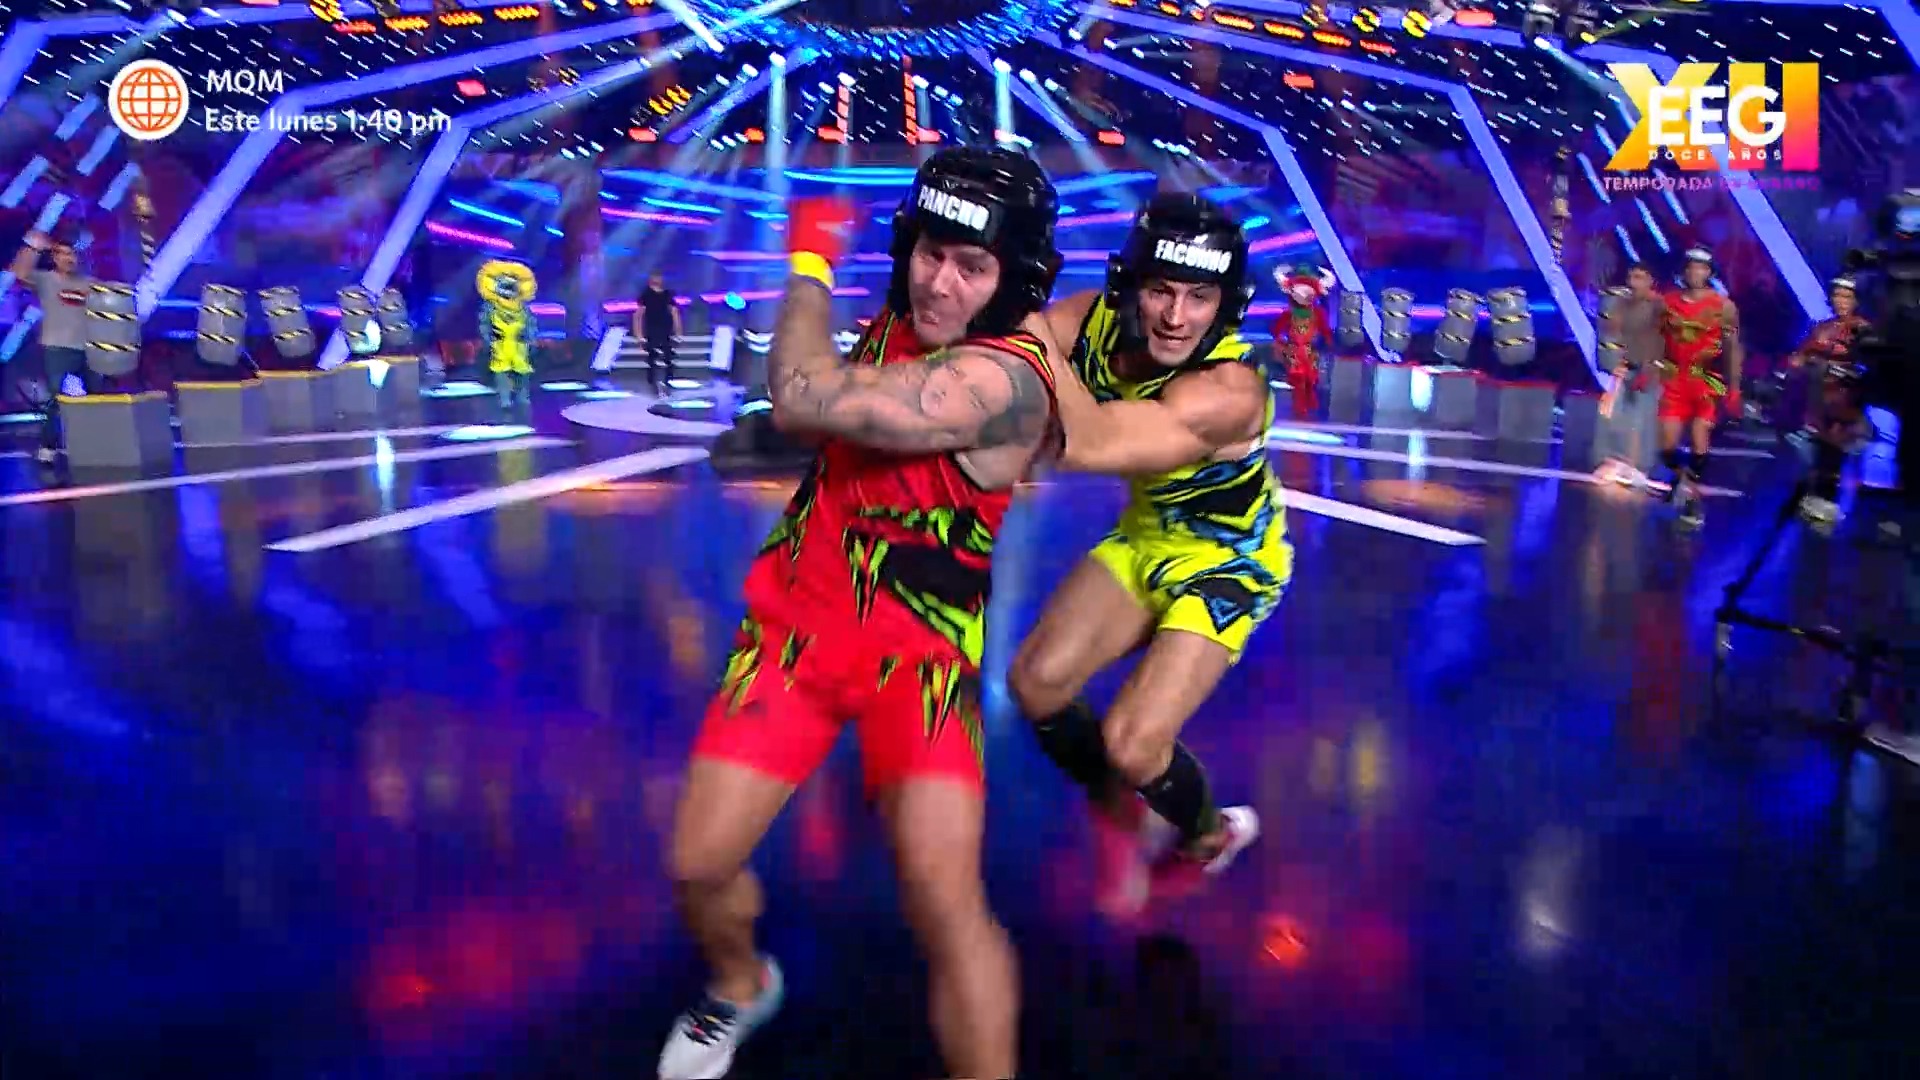 Pancho Rodríguez y Facundo González protagonizaron fuerte choque en plena competencia de EEG. Fuente: AméricaTV